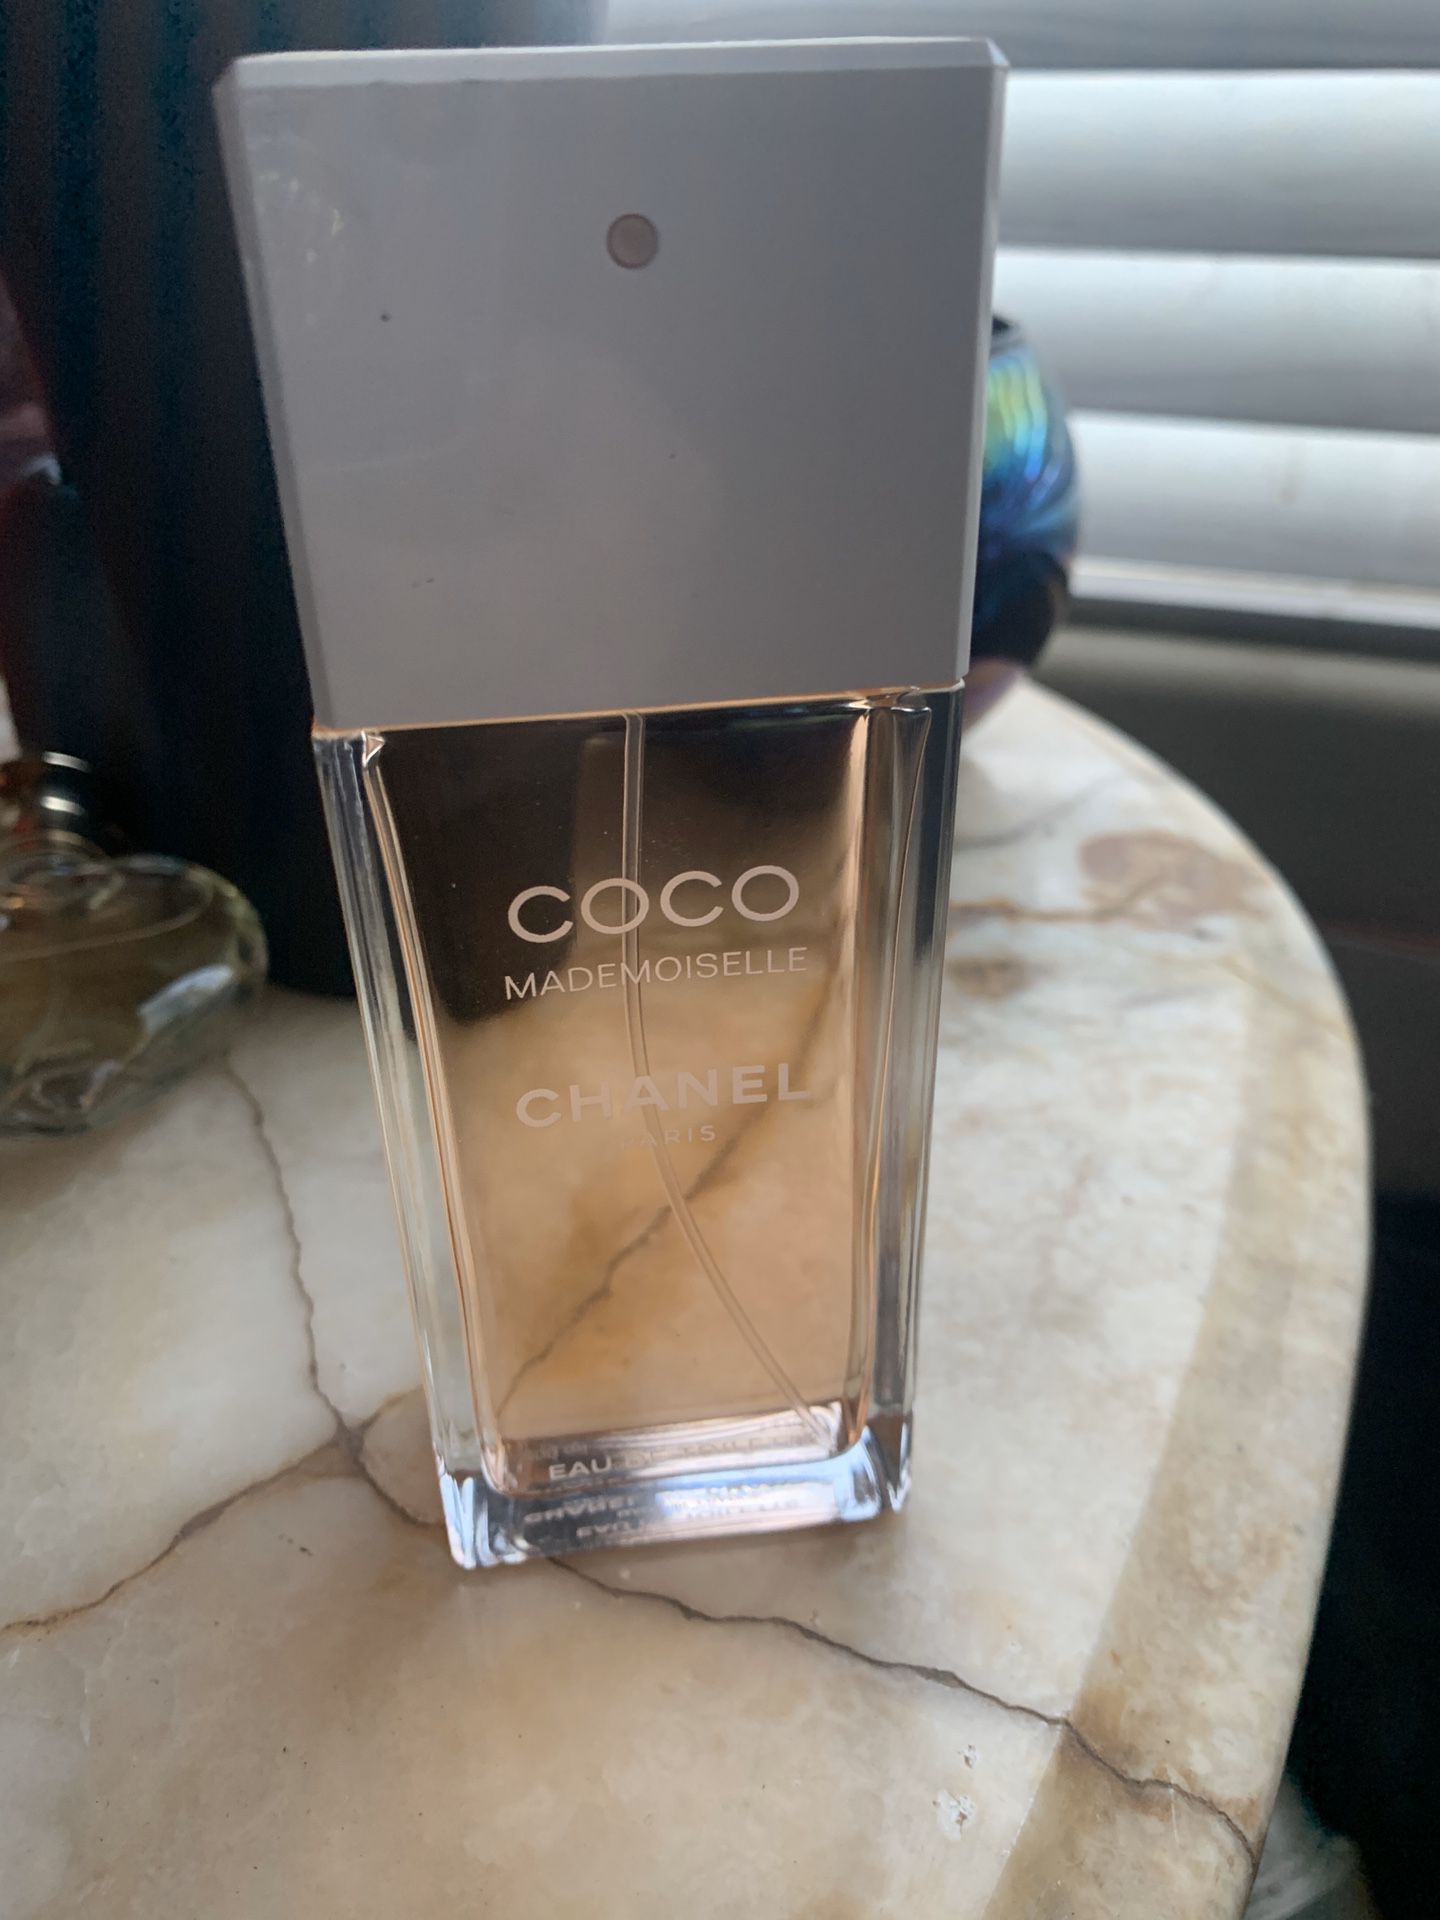 Coco mademoiselle Chanel perfume *new